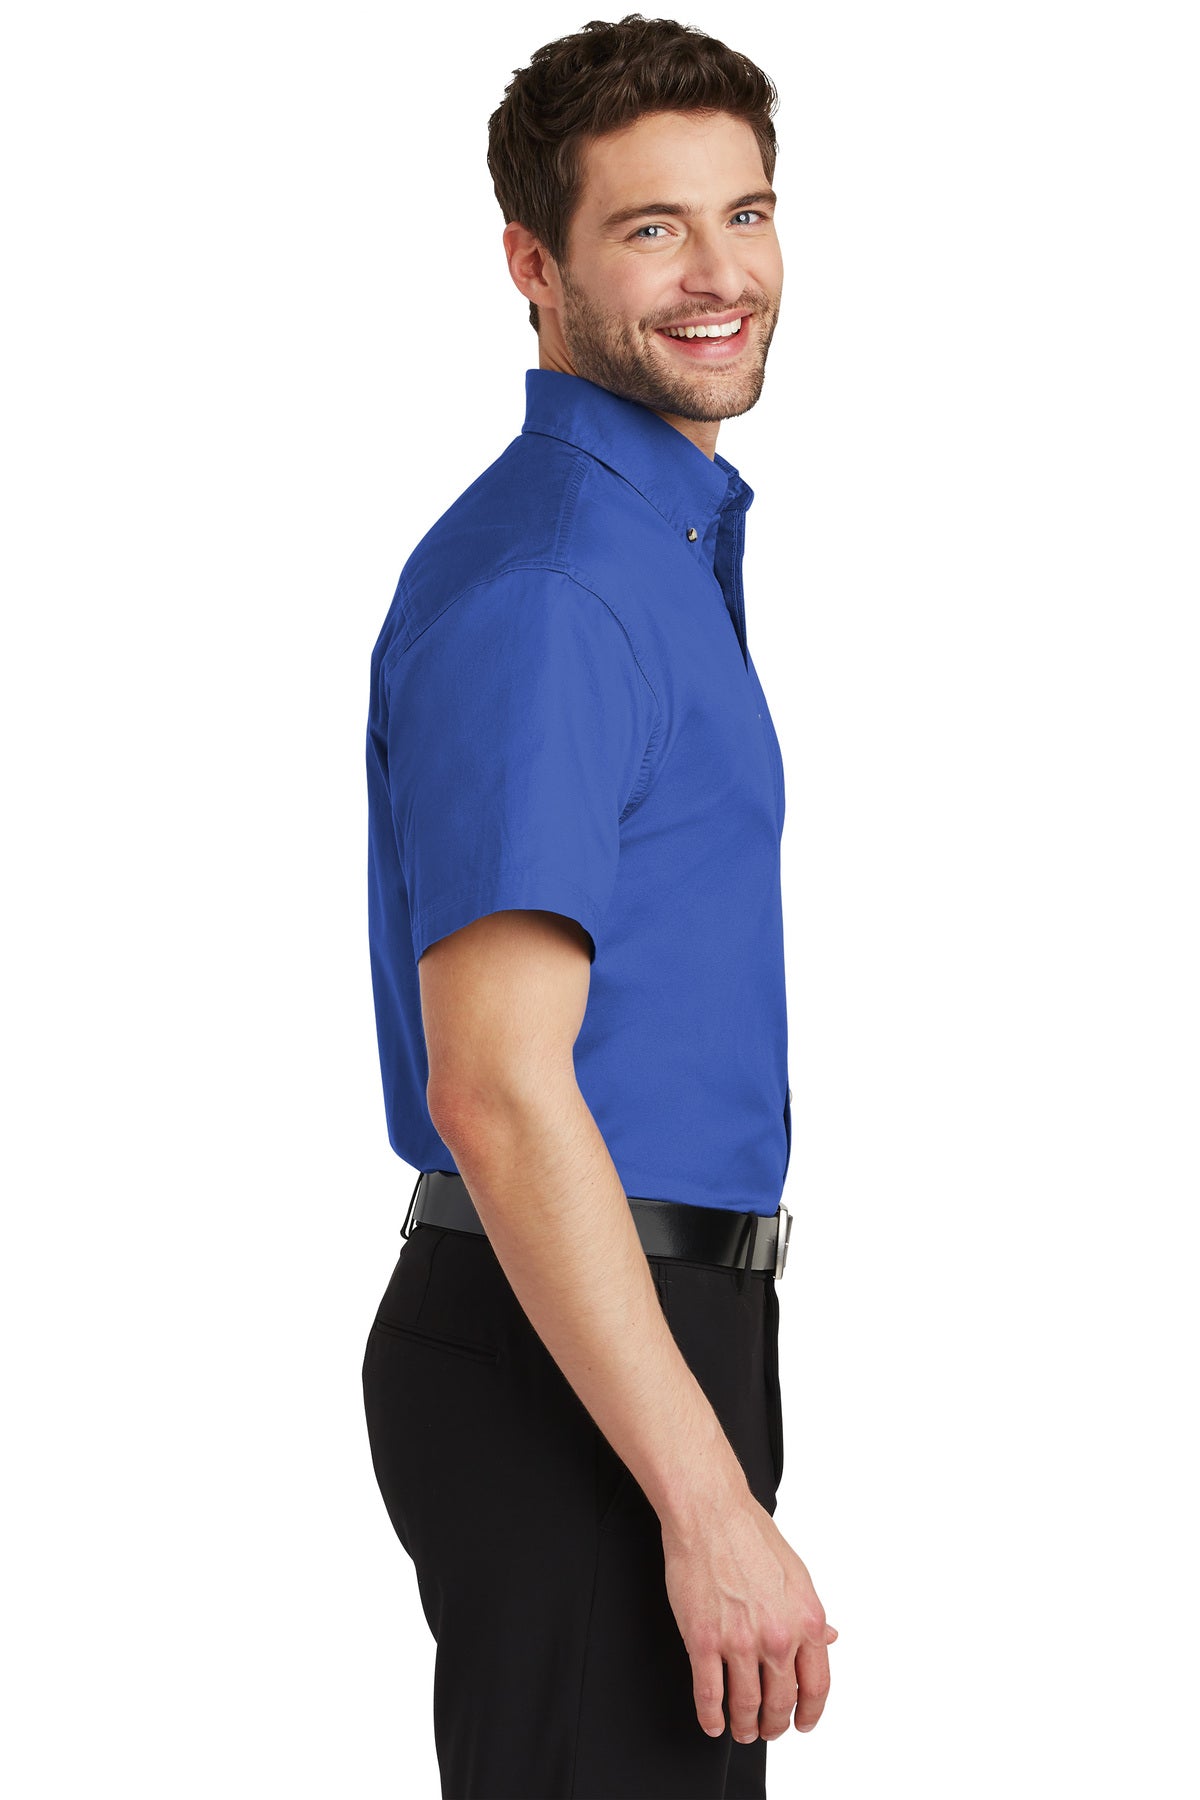 Port Authority Short Sleeve Custom Twill Shirts, Faded Blue